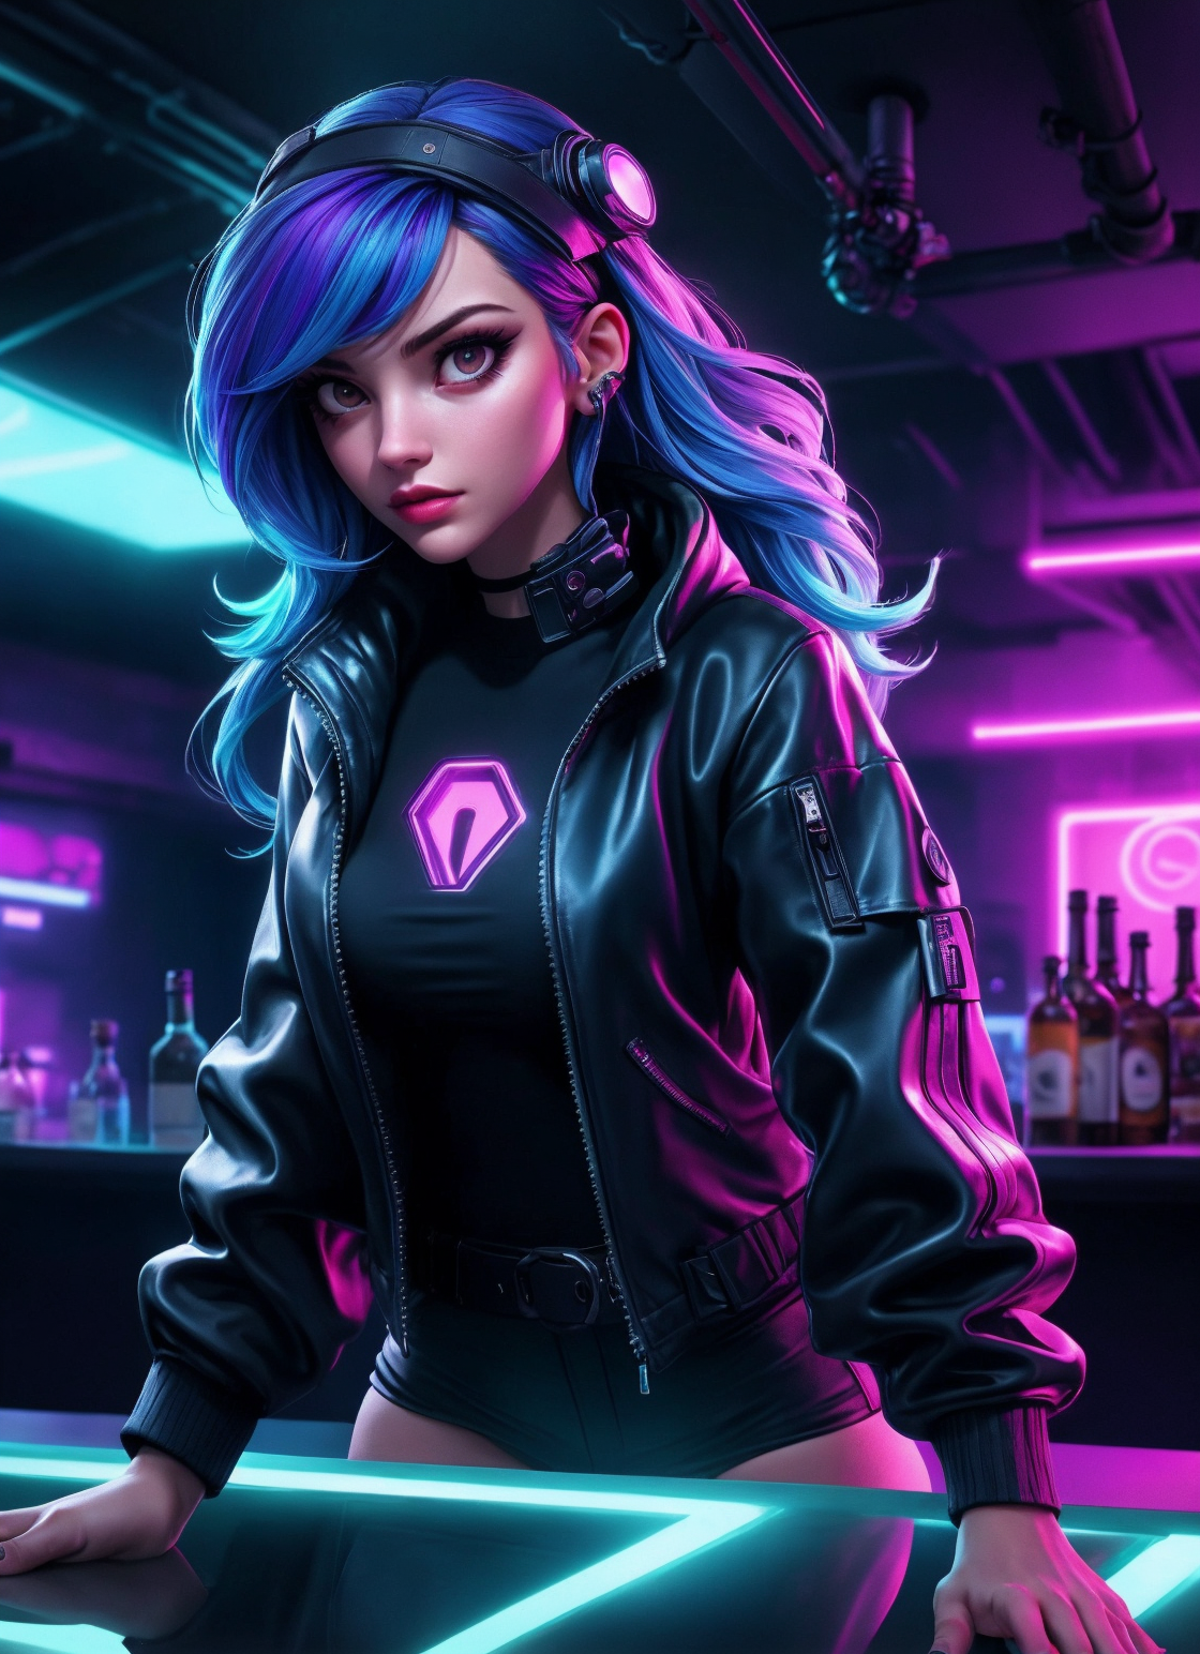 cgmech,
interior medium shot of a beautiful cyberpunk character, women urbansamurai inside a nightclub wearing a (techwear...